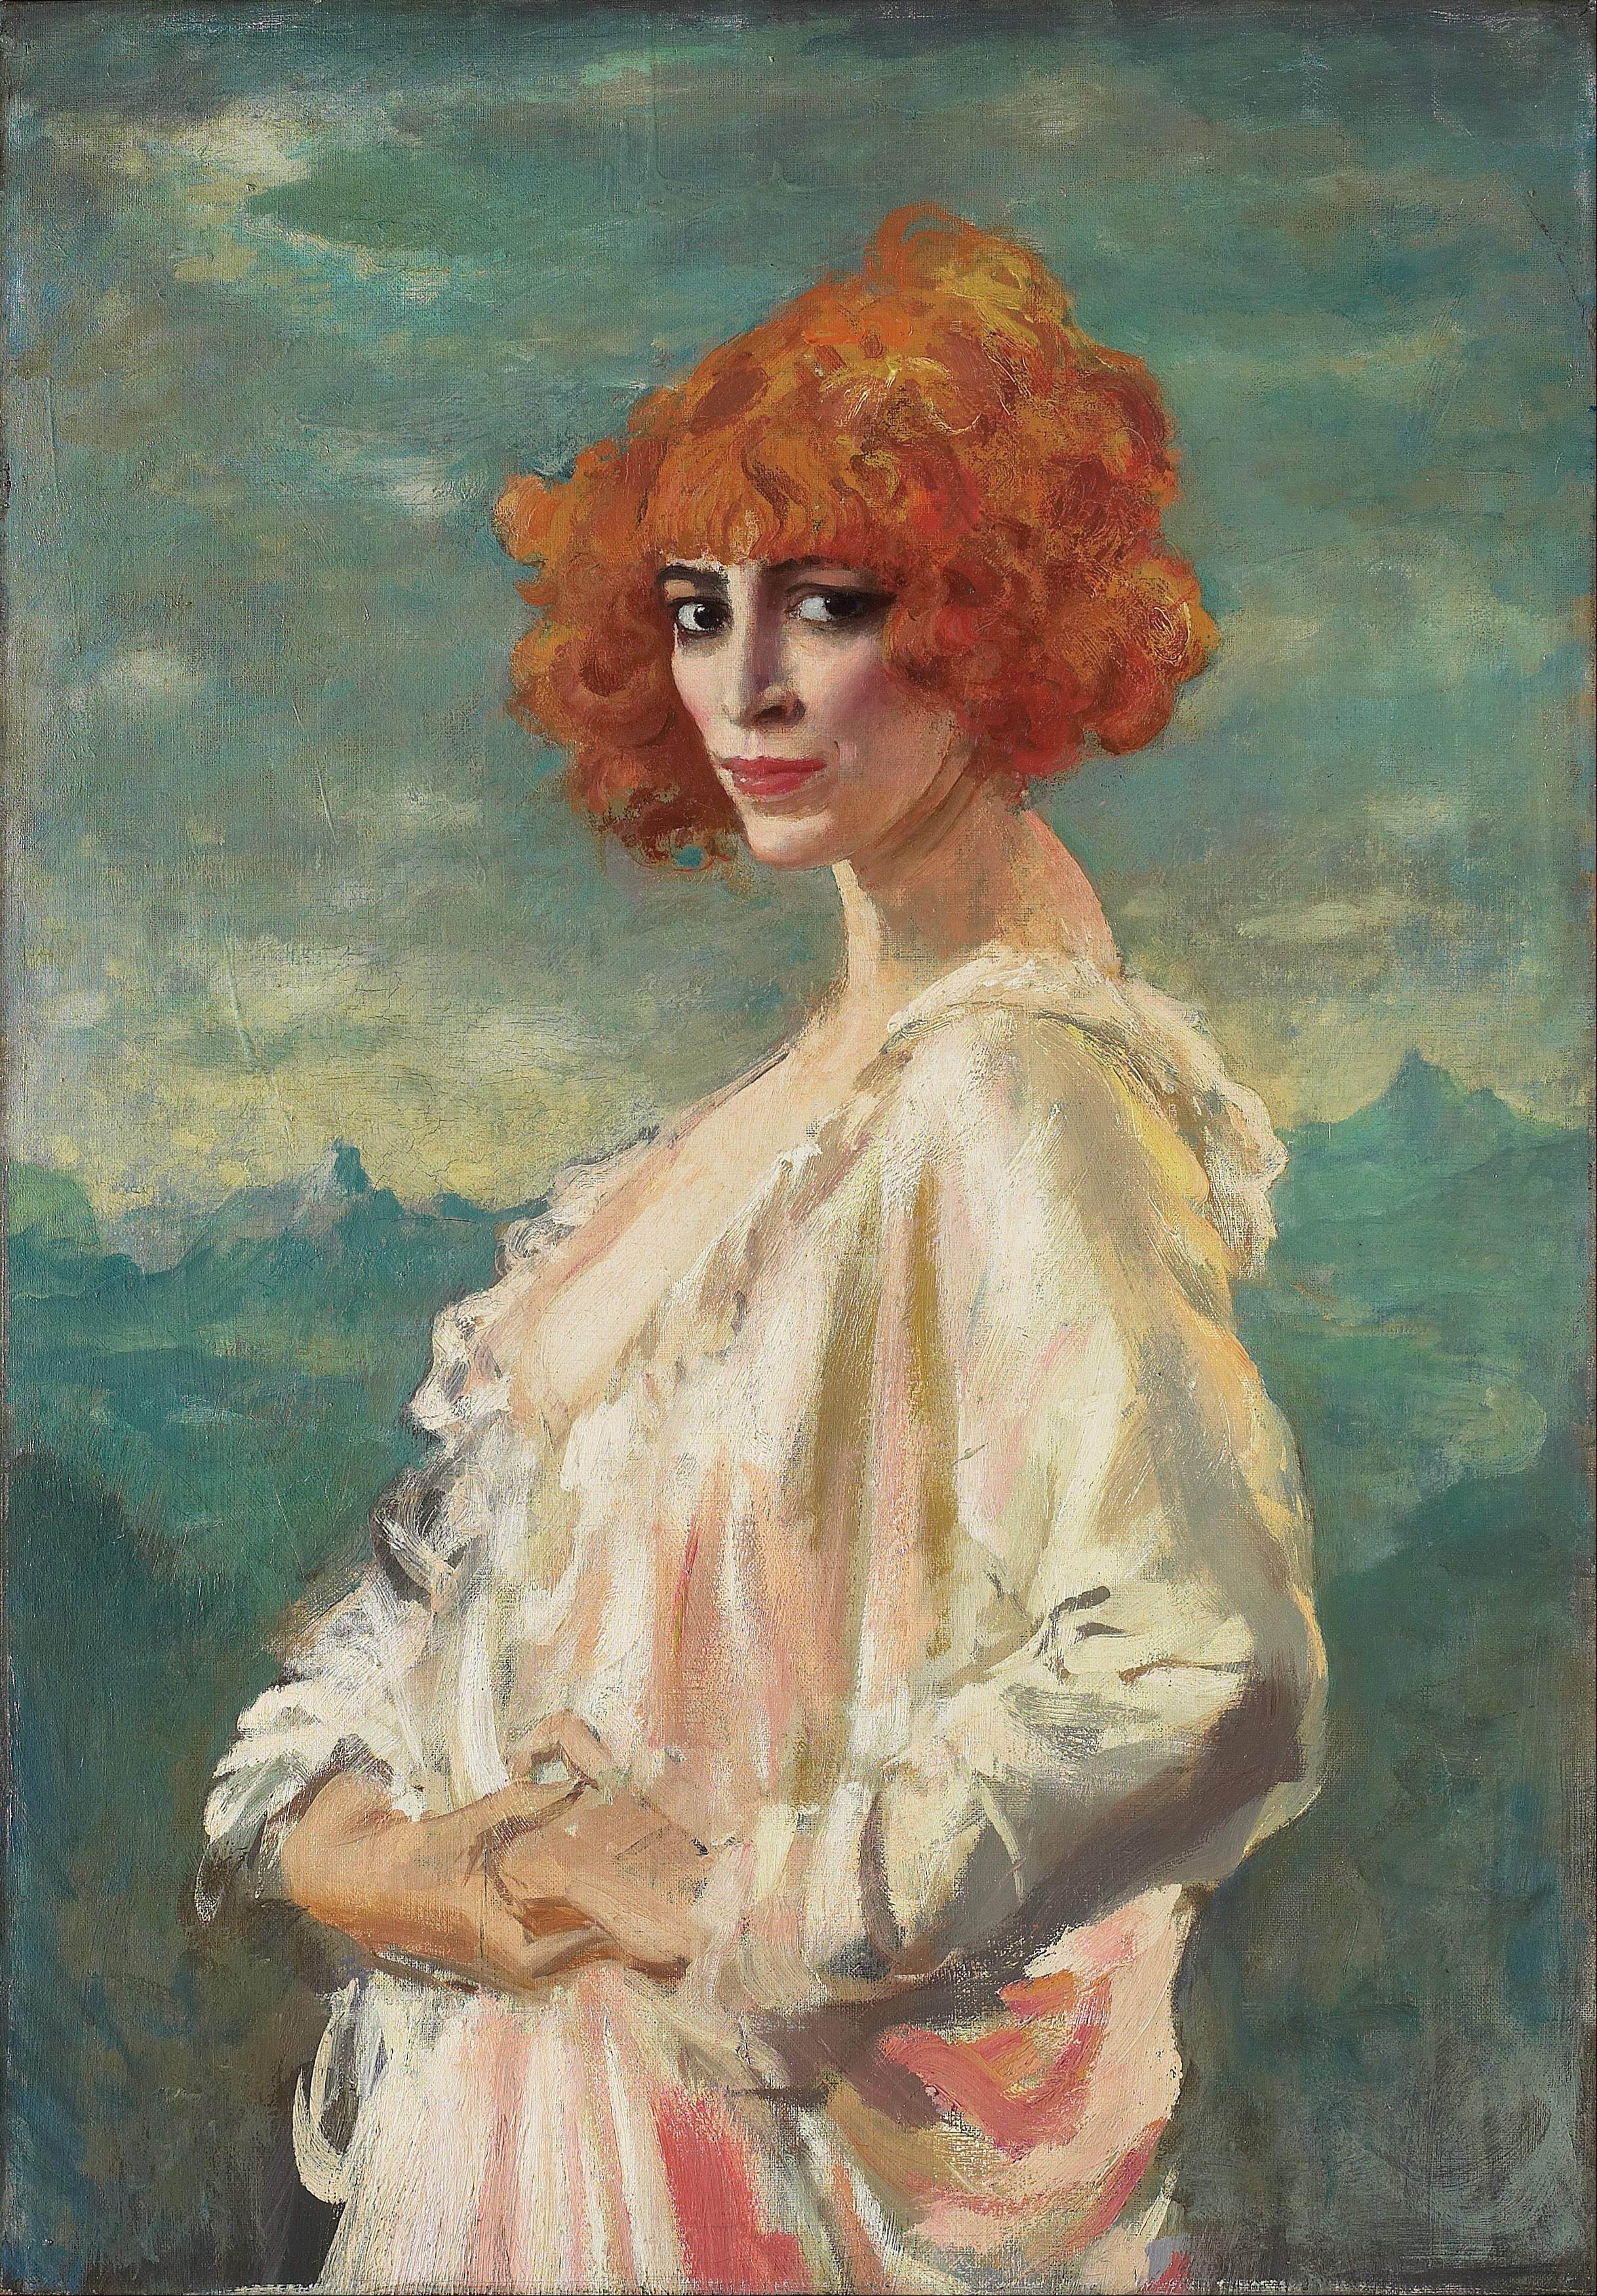 Marchesa Casati by Augustus Edwin John - 1919 - 68.6 x 96.5 cm 